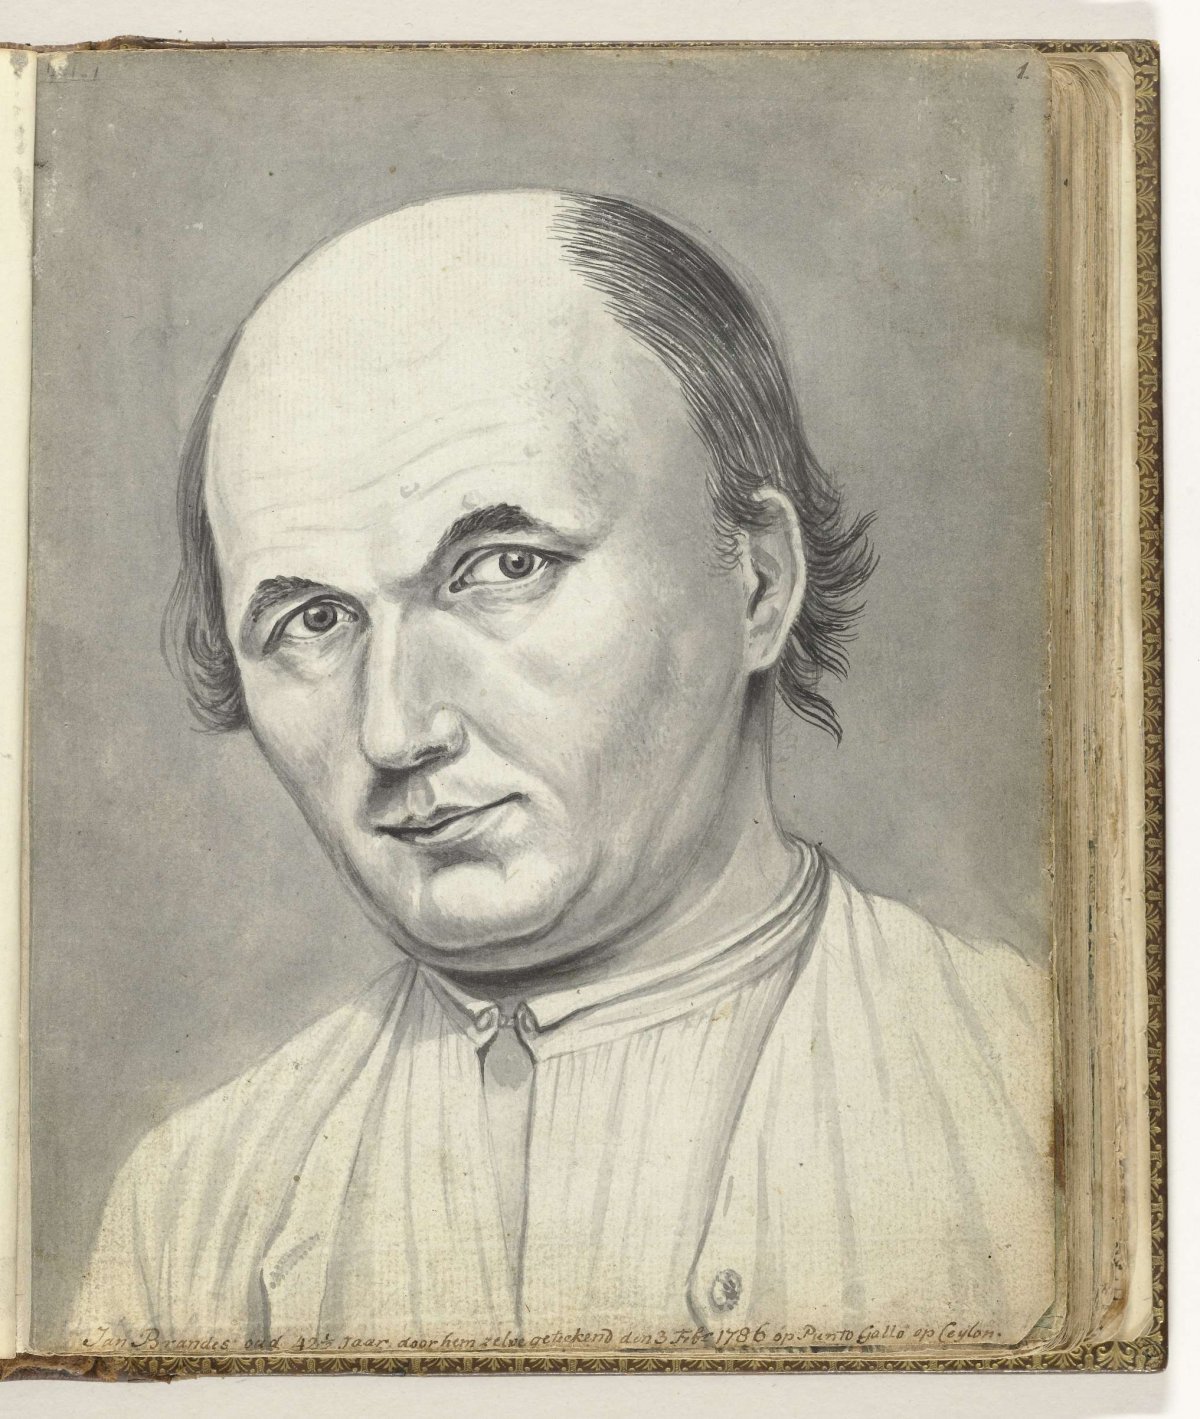 Self-portrait of Jan Brandes, Jan Brandes, 1786